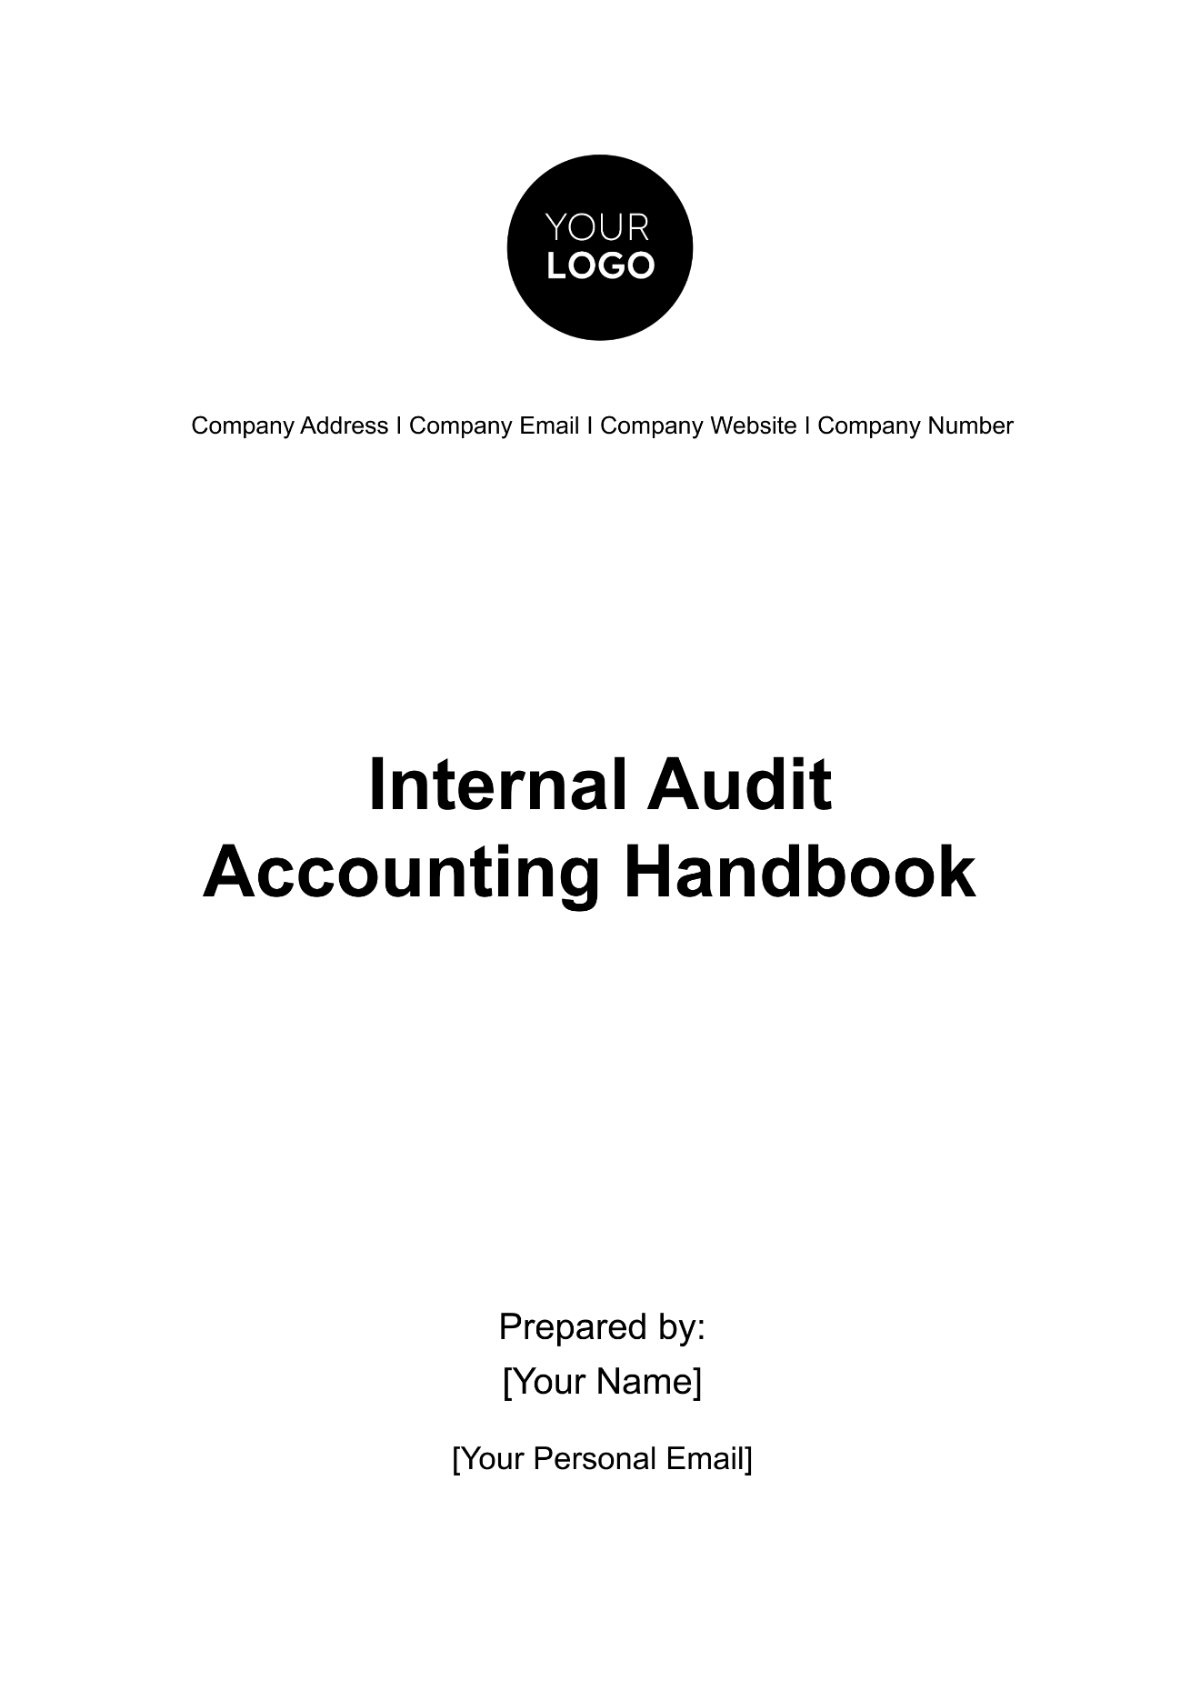 Internal Audit Accounting Handbook Template